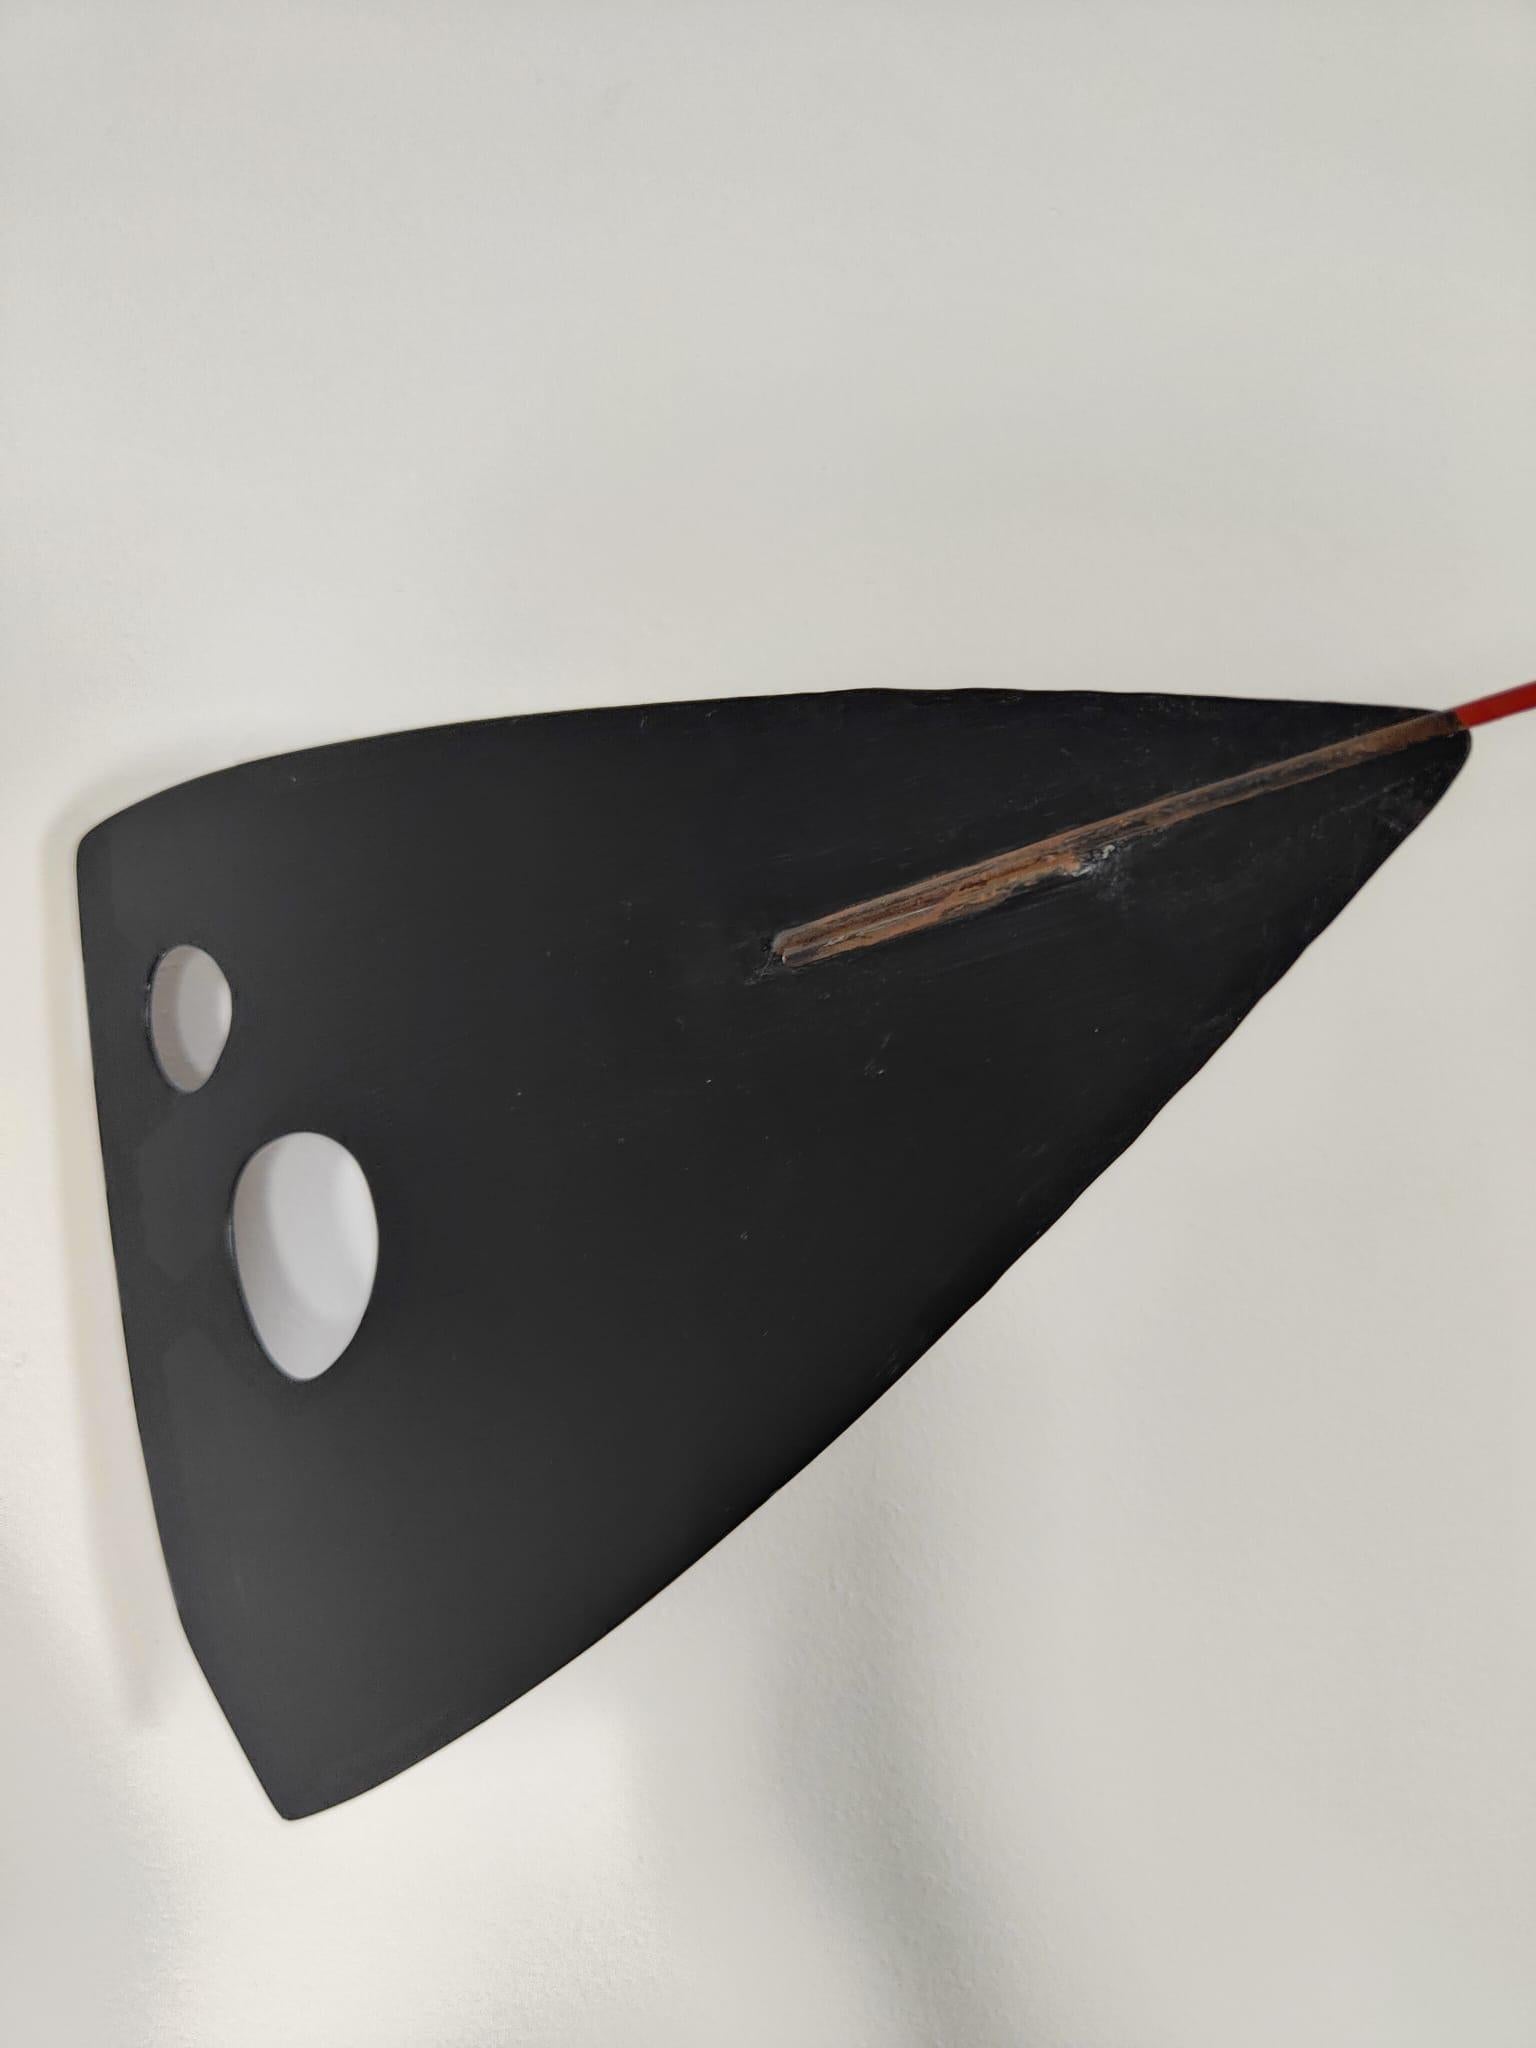 20th Century In the Manner of Alexander Calder Hanging mobile Sculpture